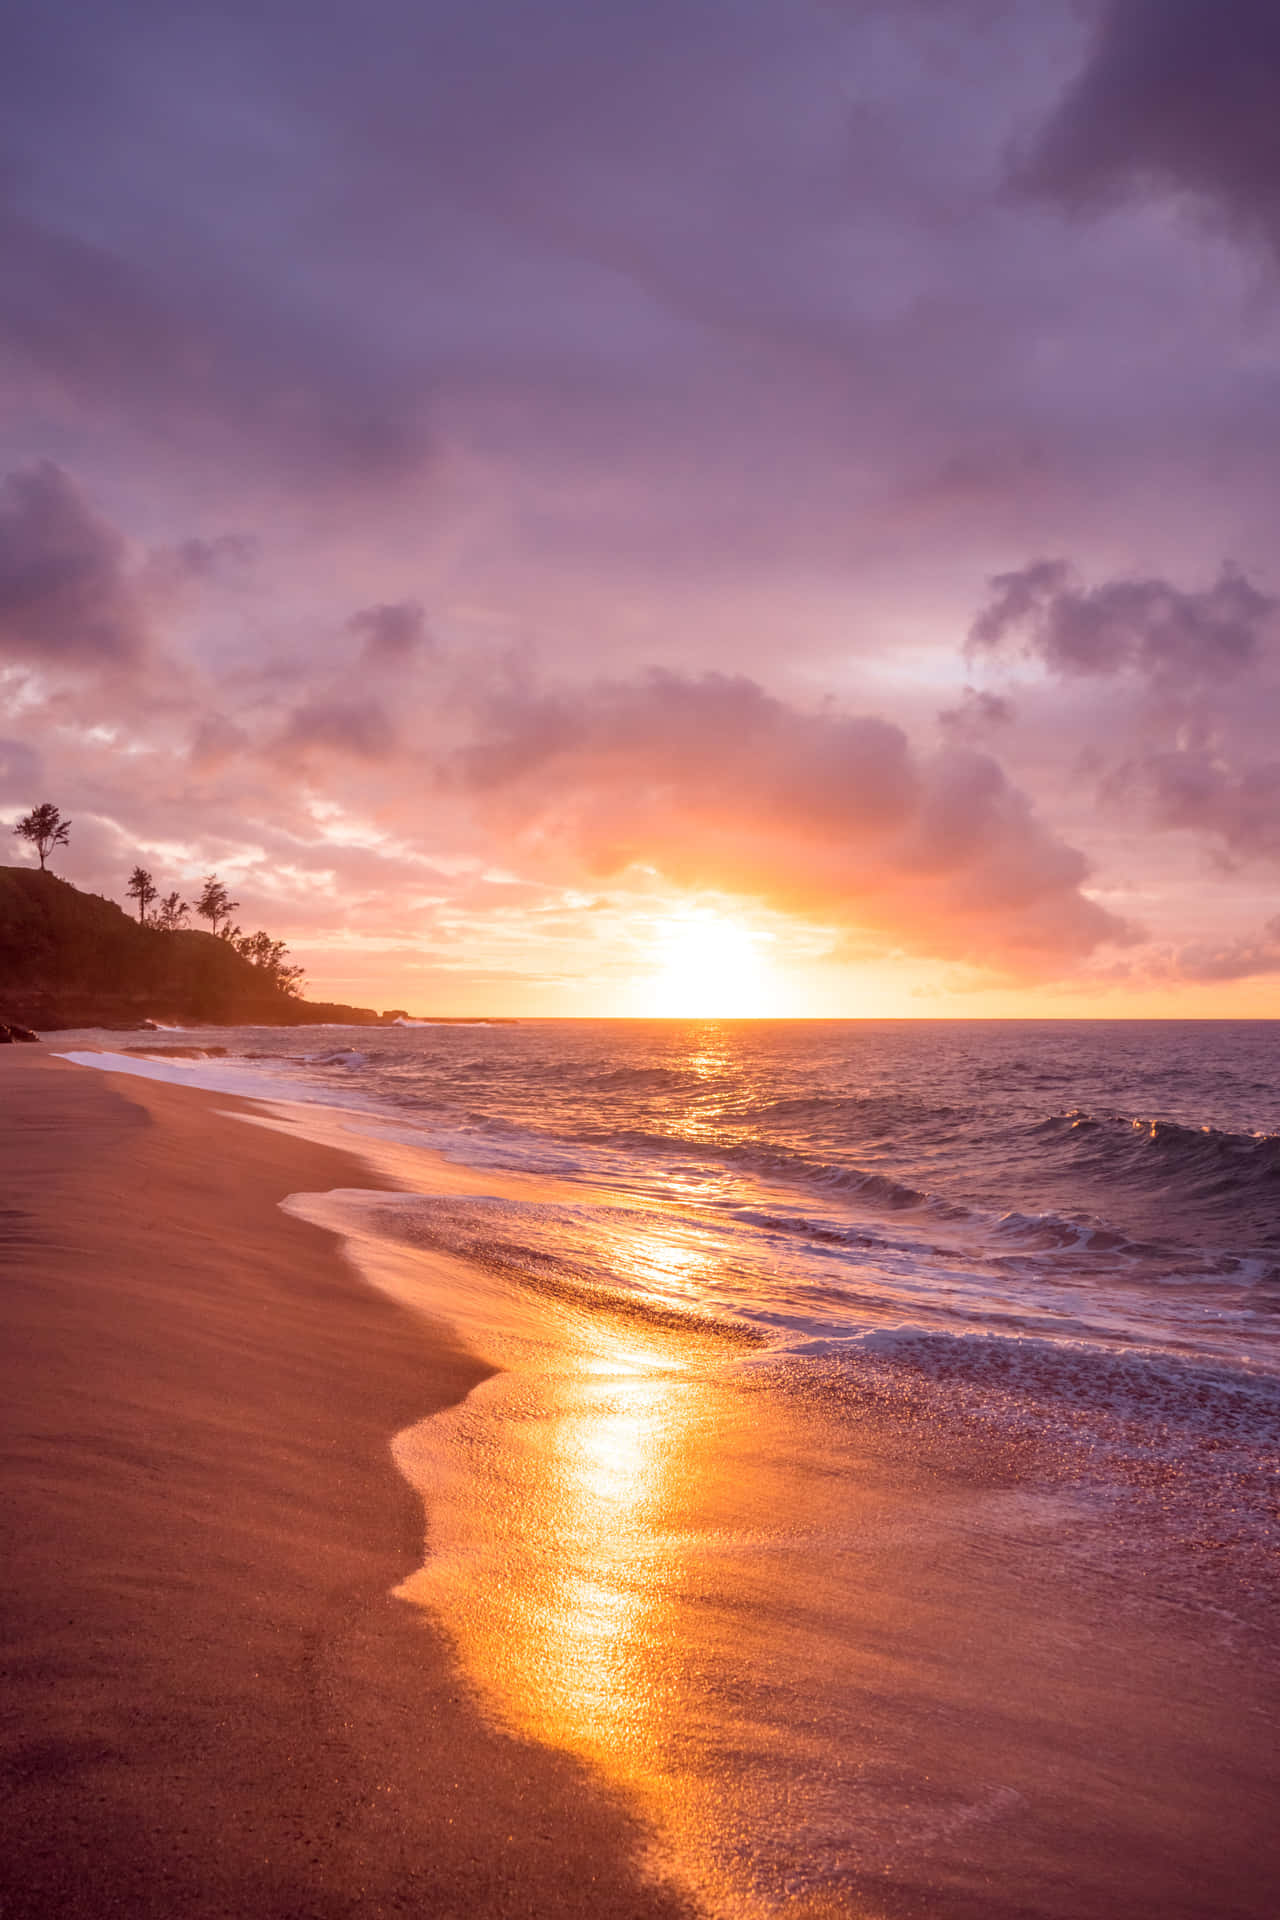 Caption: Stunning Sunset At The Beach